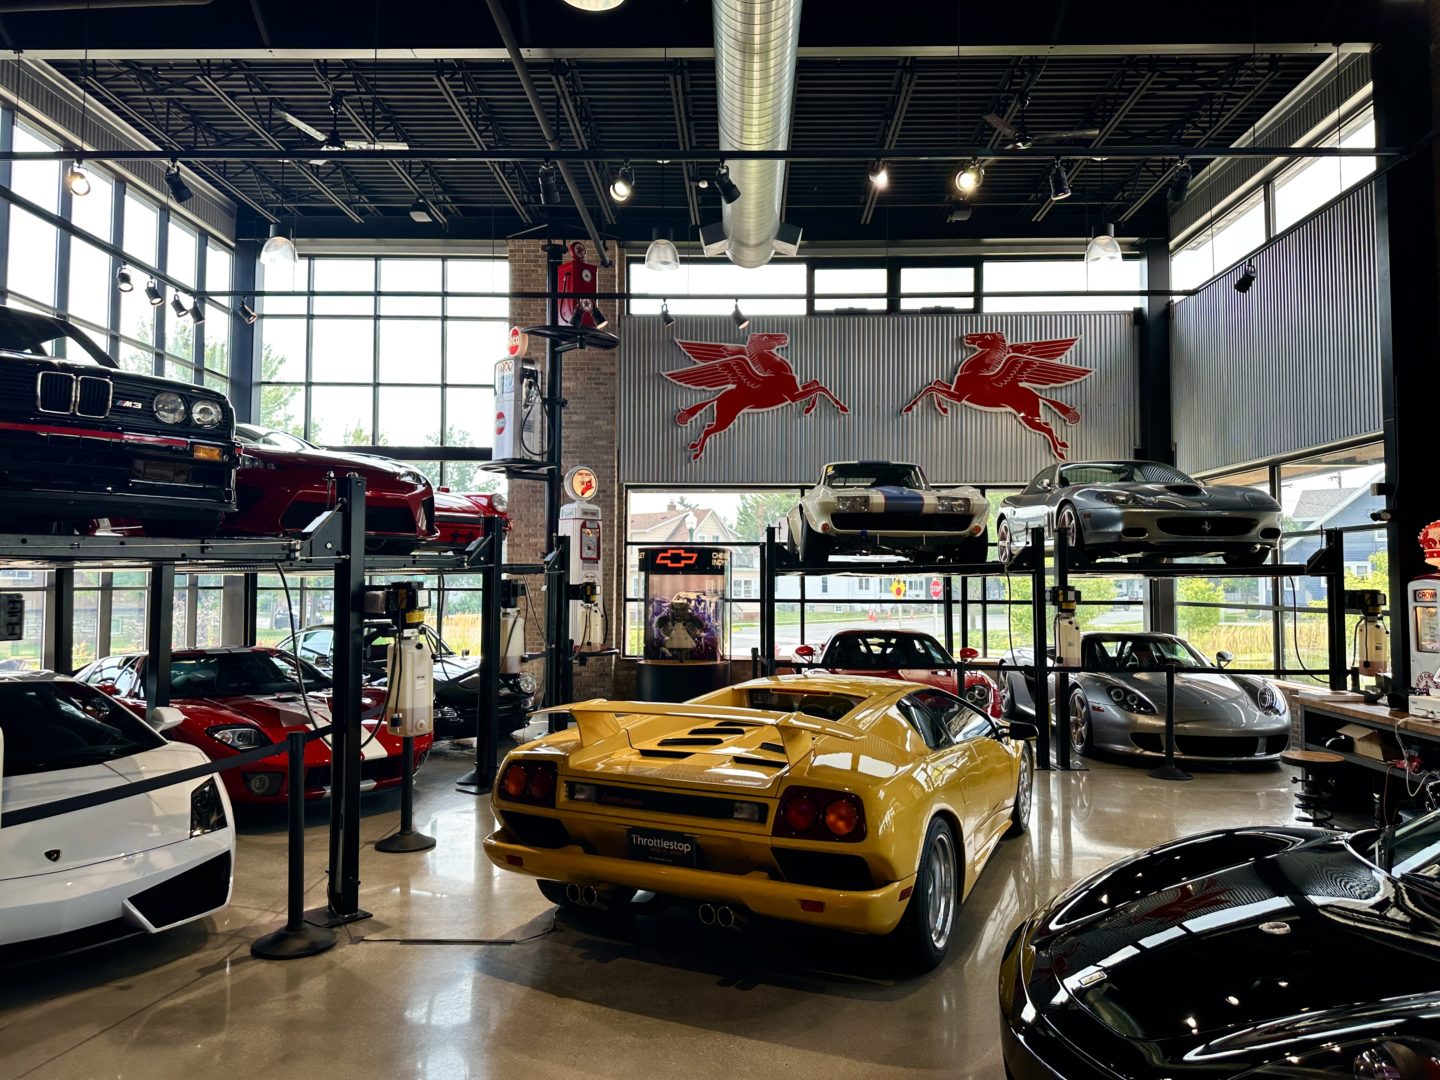 The Throttlestop Museum cars